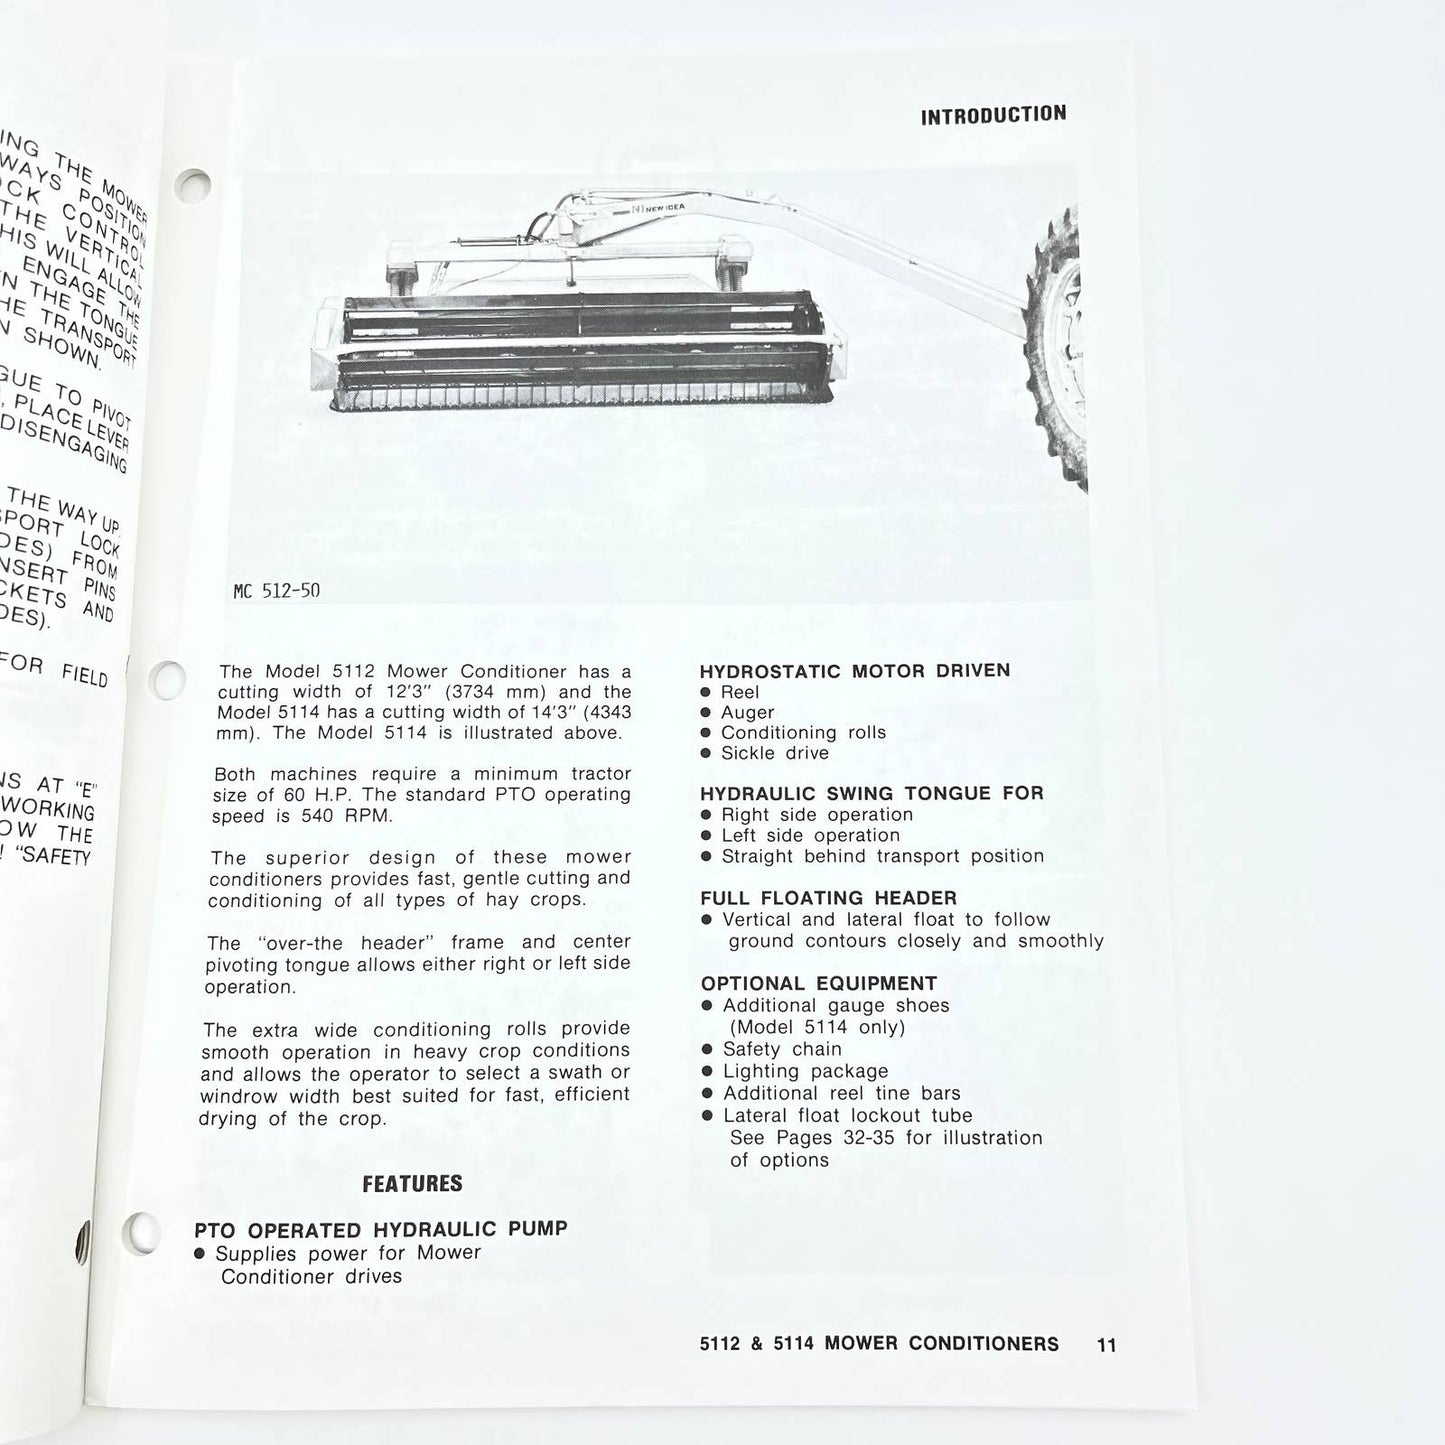 Original 1989 New Idea Operator's Manual 5112 5114 Mower Conditioners 986886 TB9